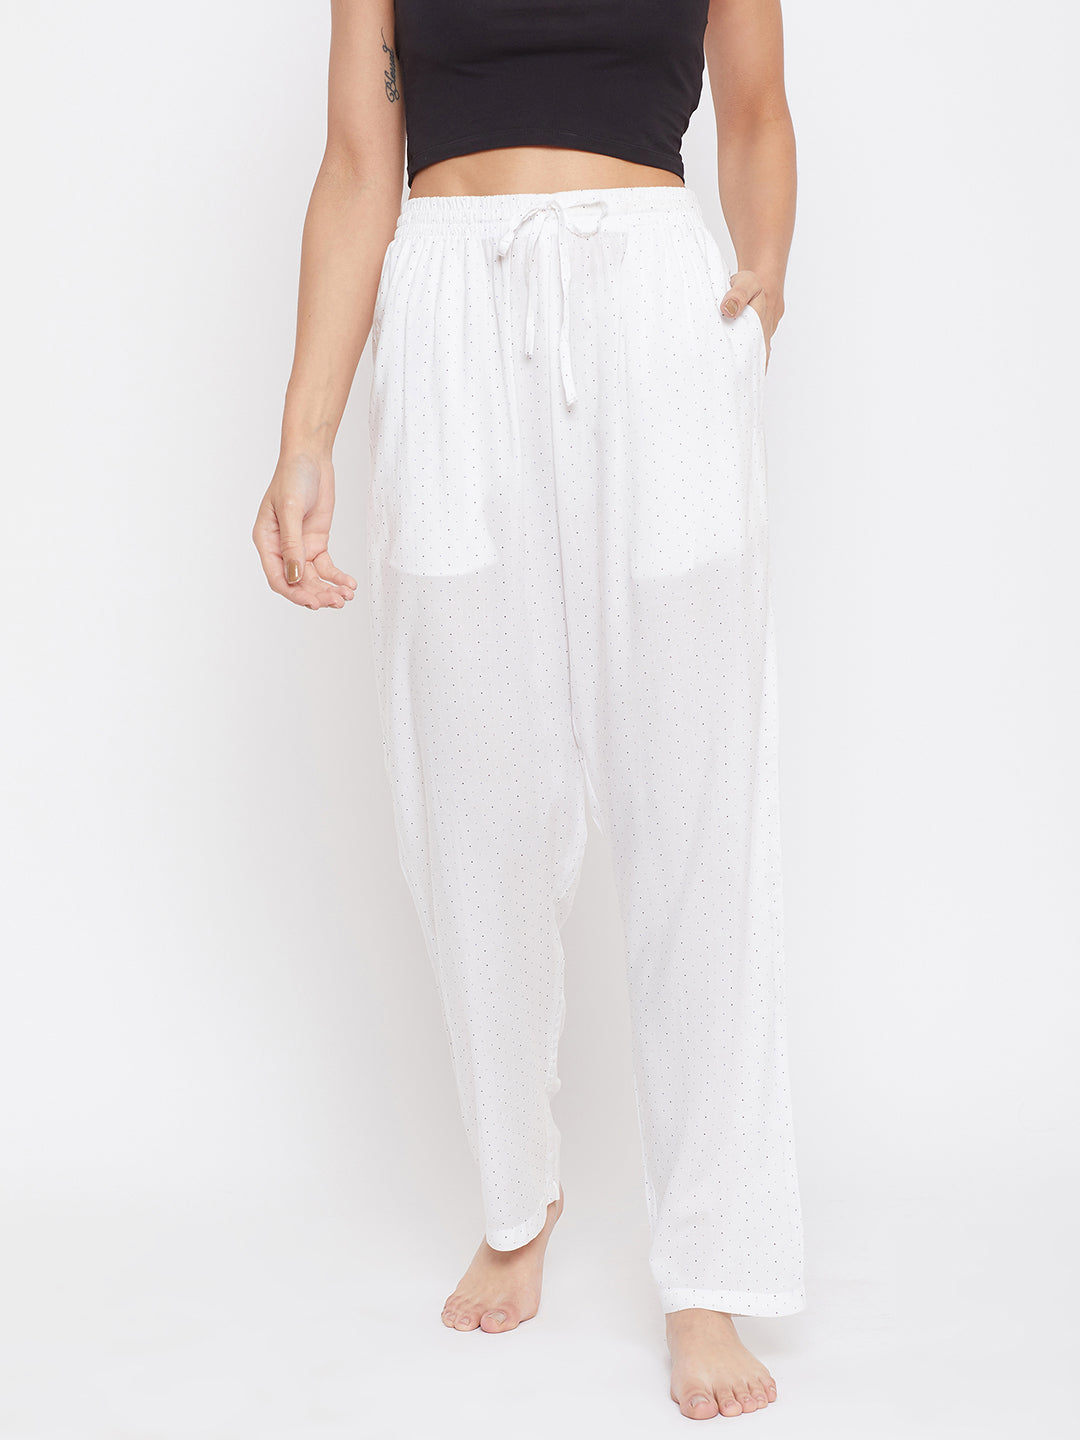 White Cotton Pyjamas - Women Lounge Pants